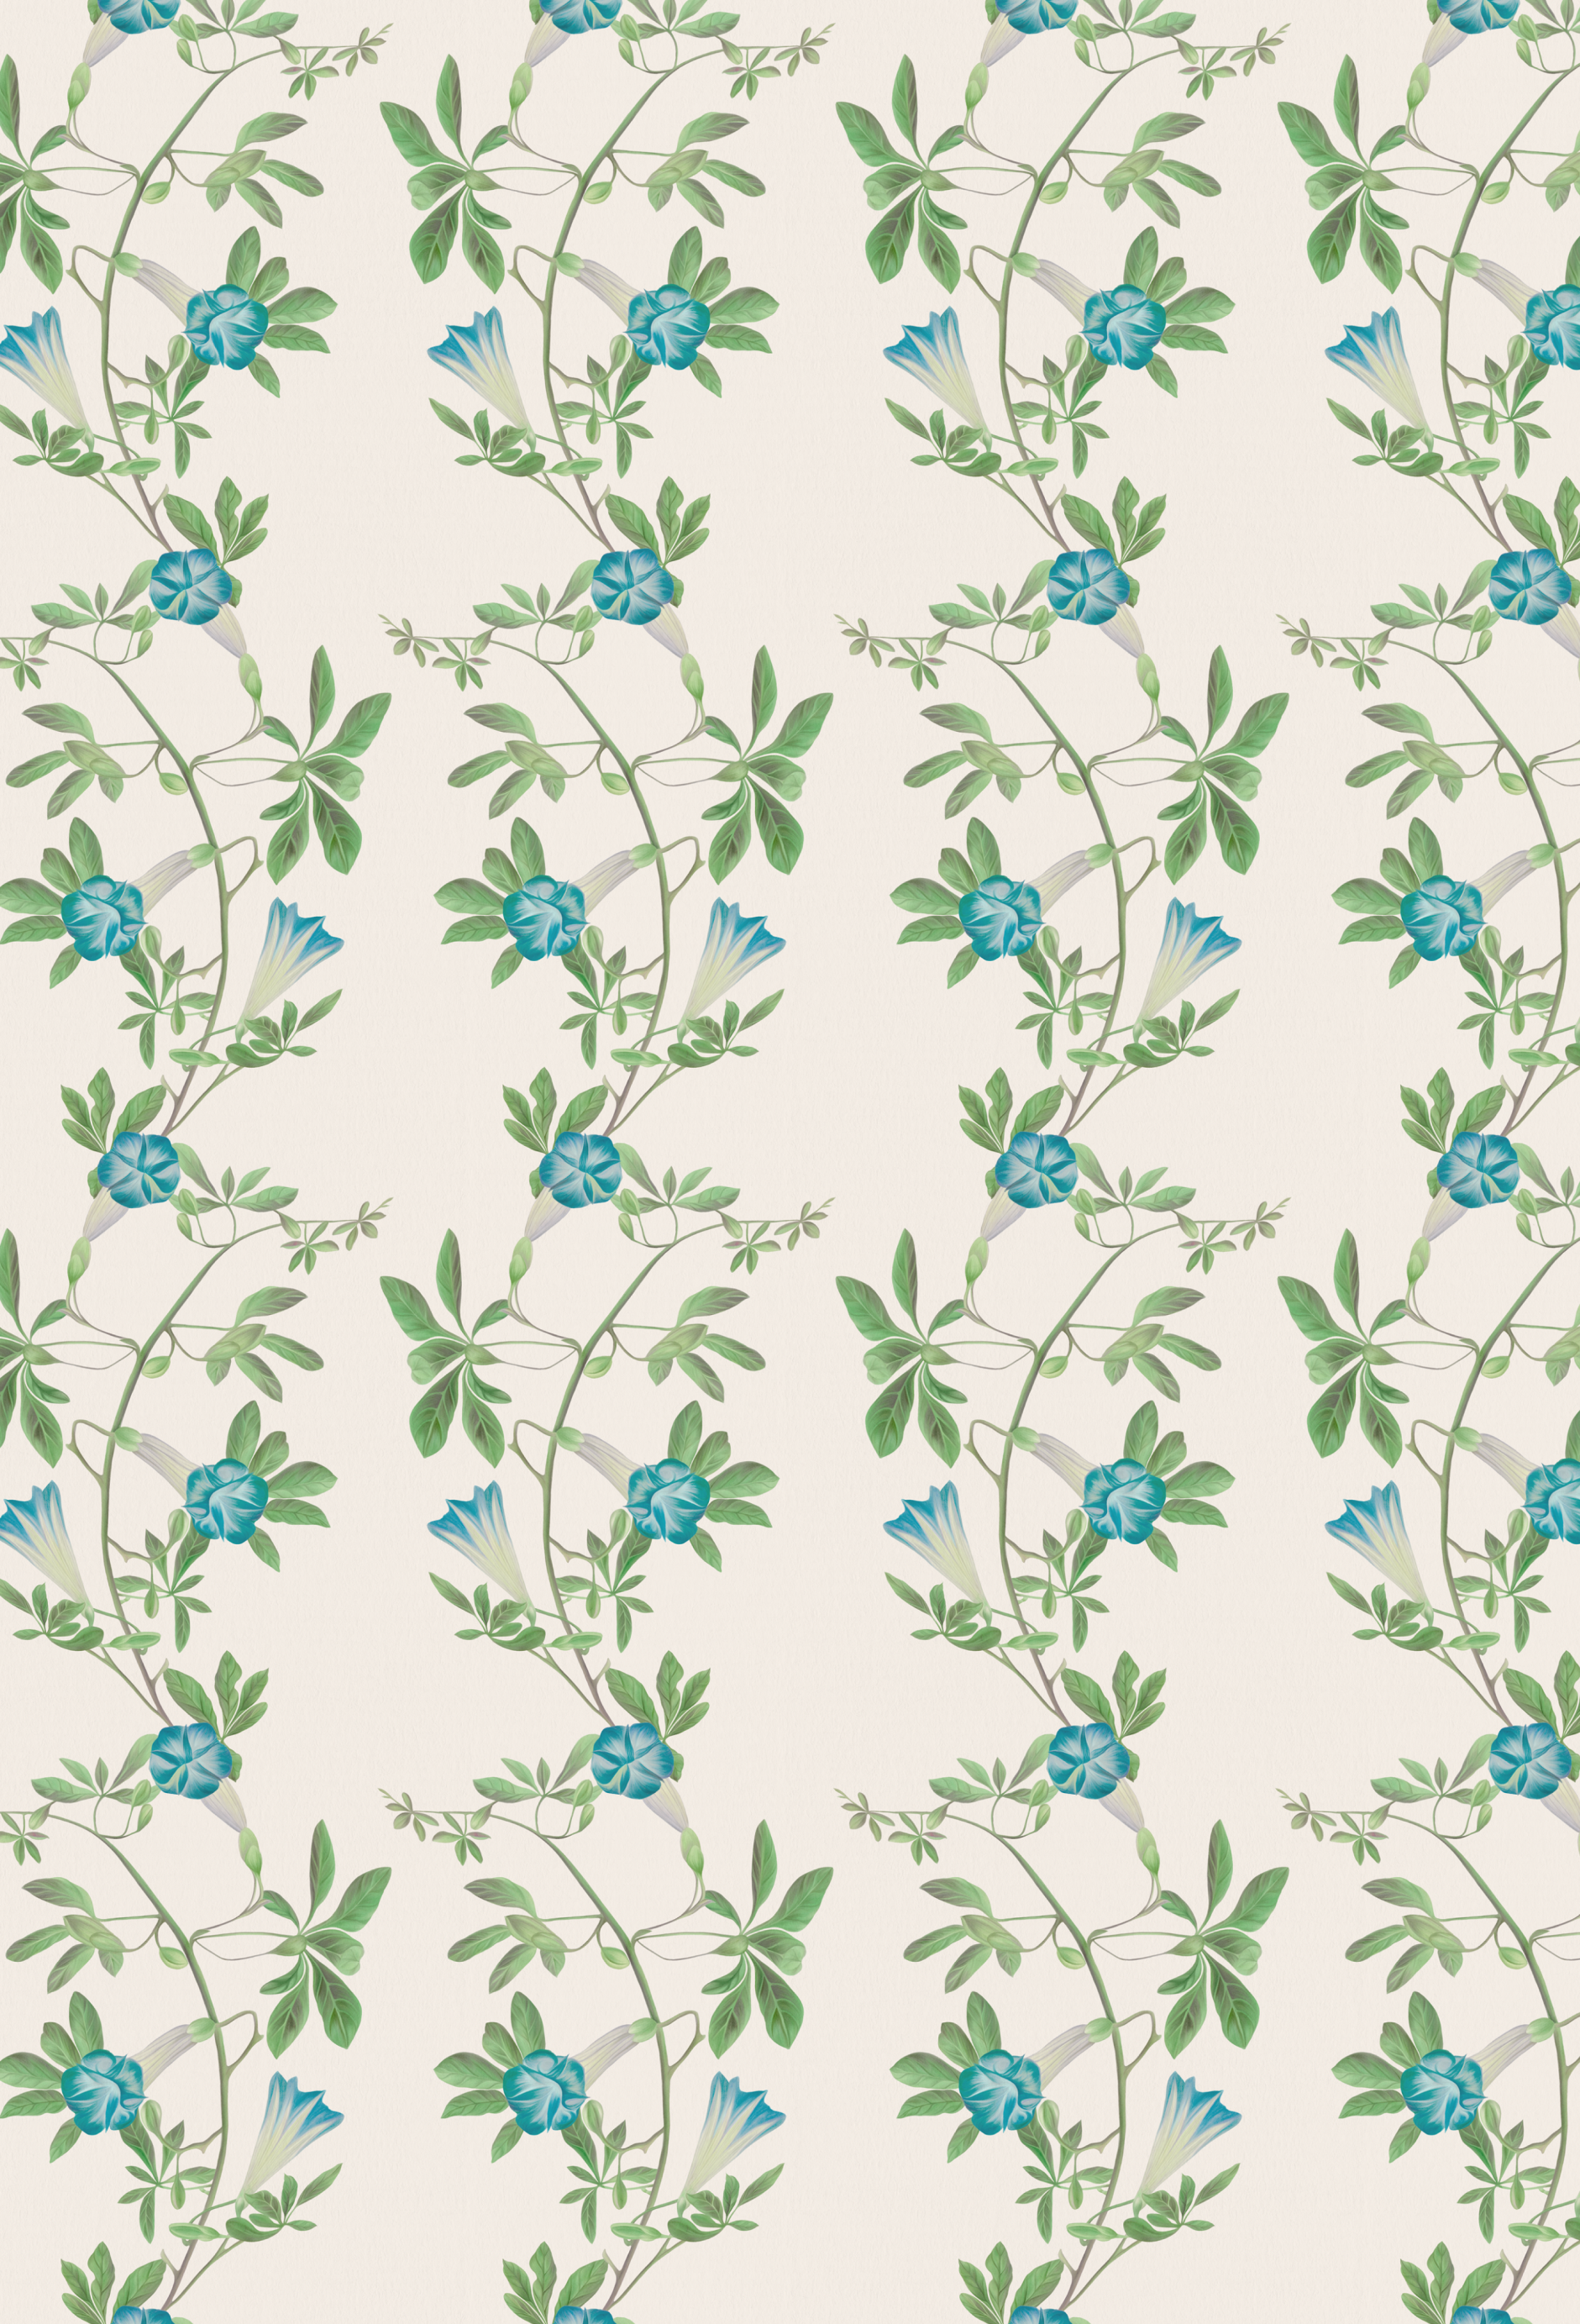 Midsummer's Linen Luxury Wallpaper with blue botanical florals by Deus ex Gardenia.